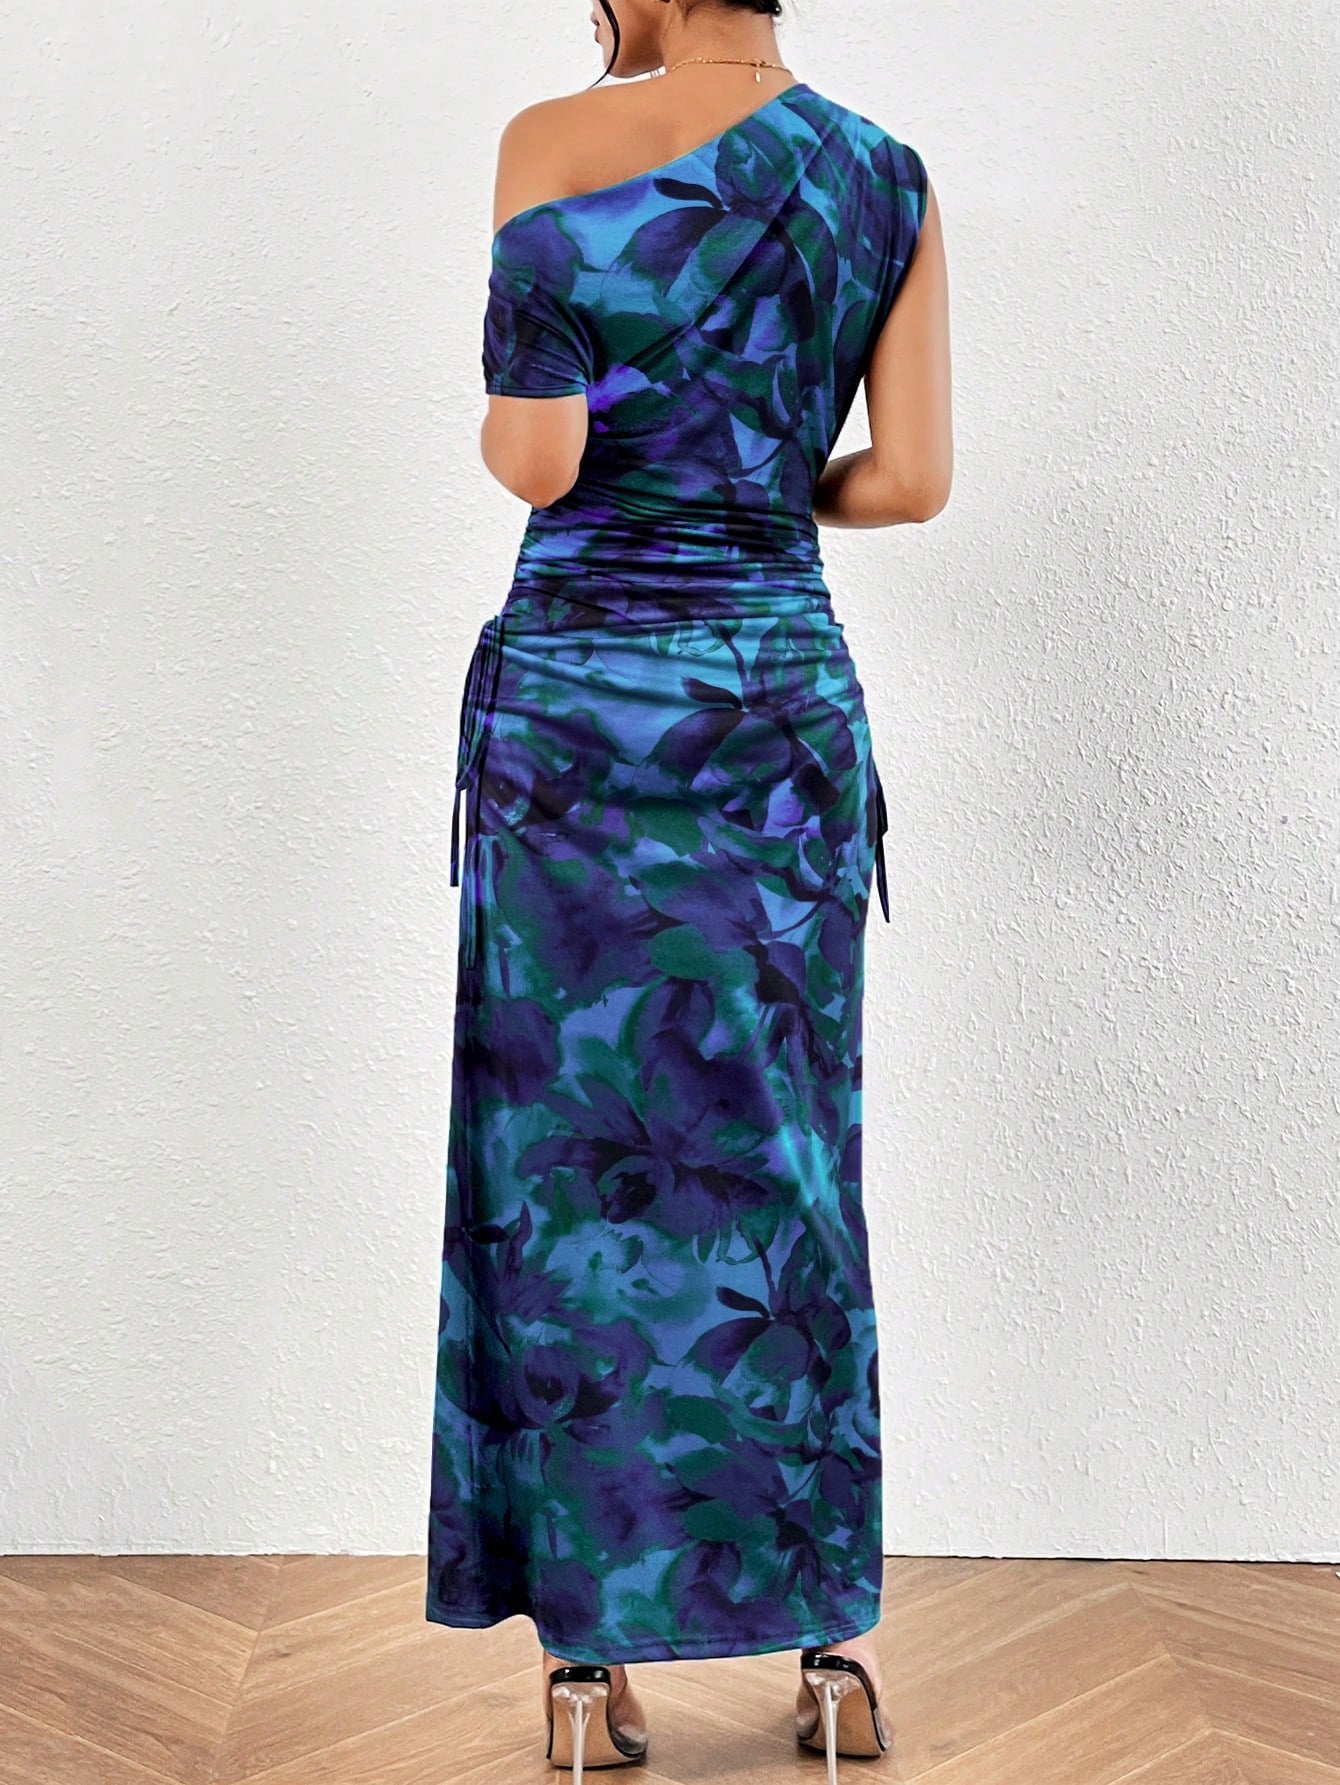 Leopard Print Asymmetrical Neck Ruched Side Mermaid Hem Dress